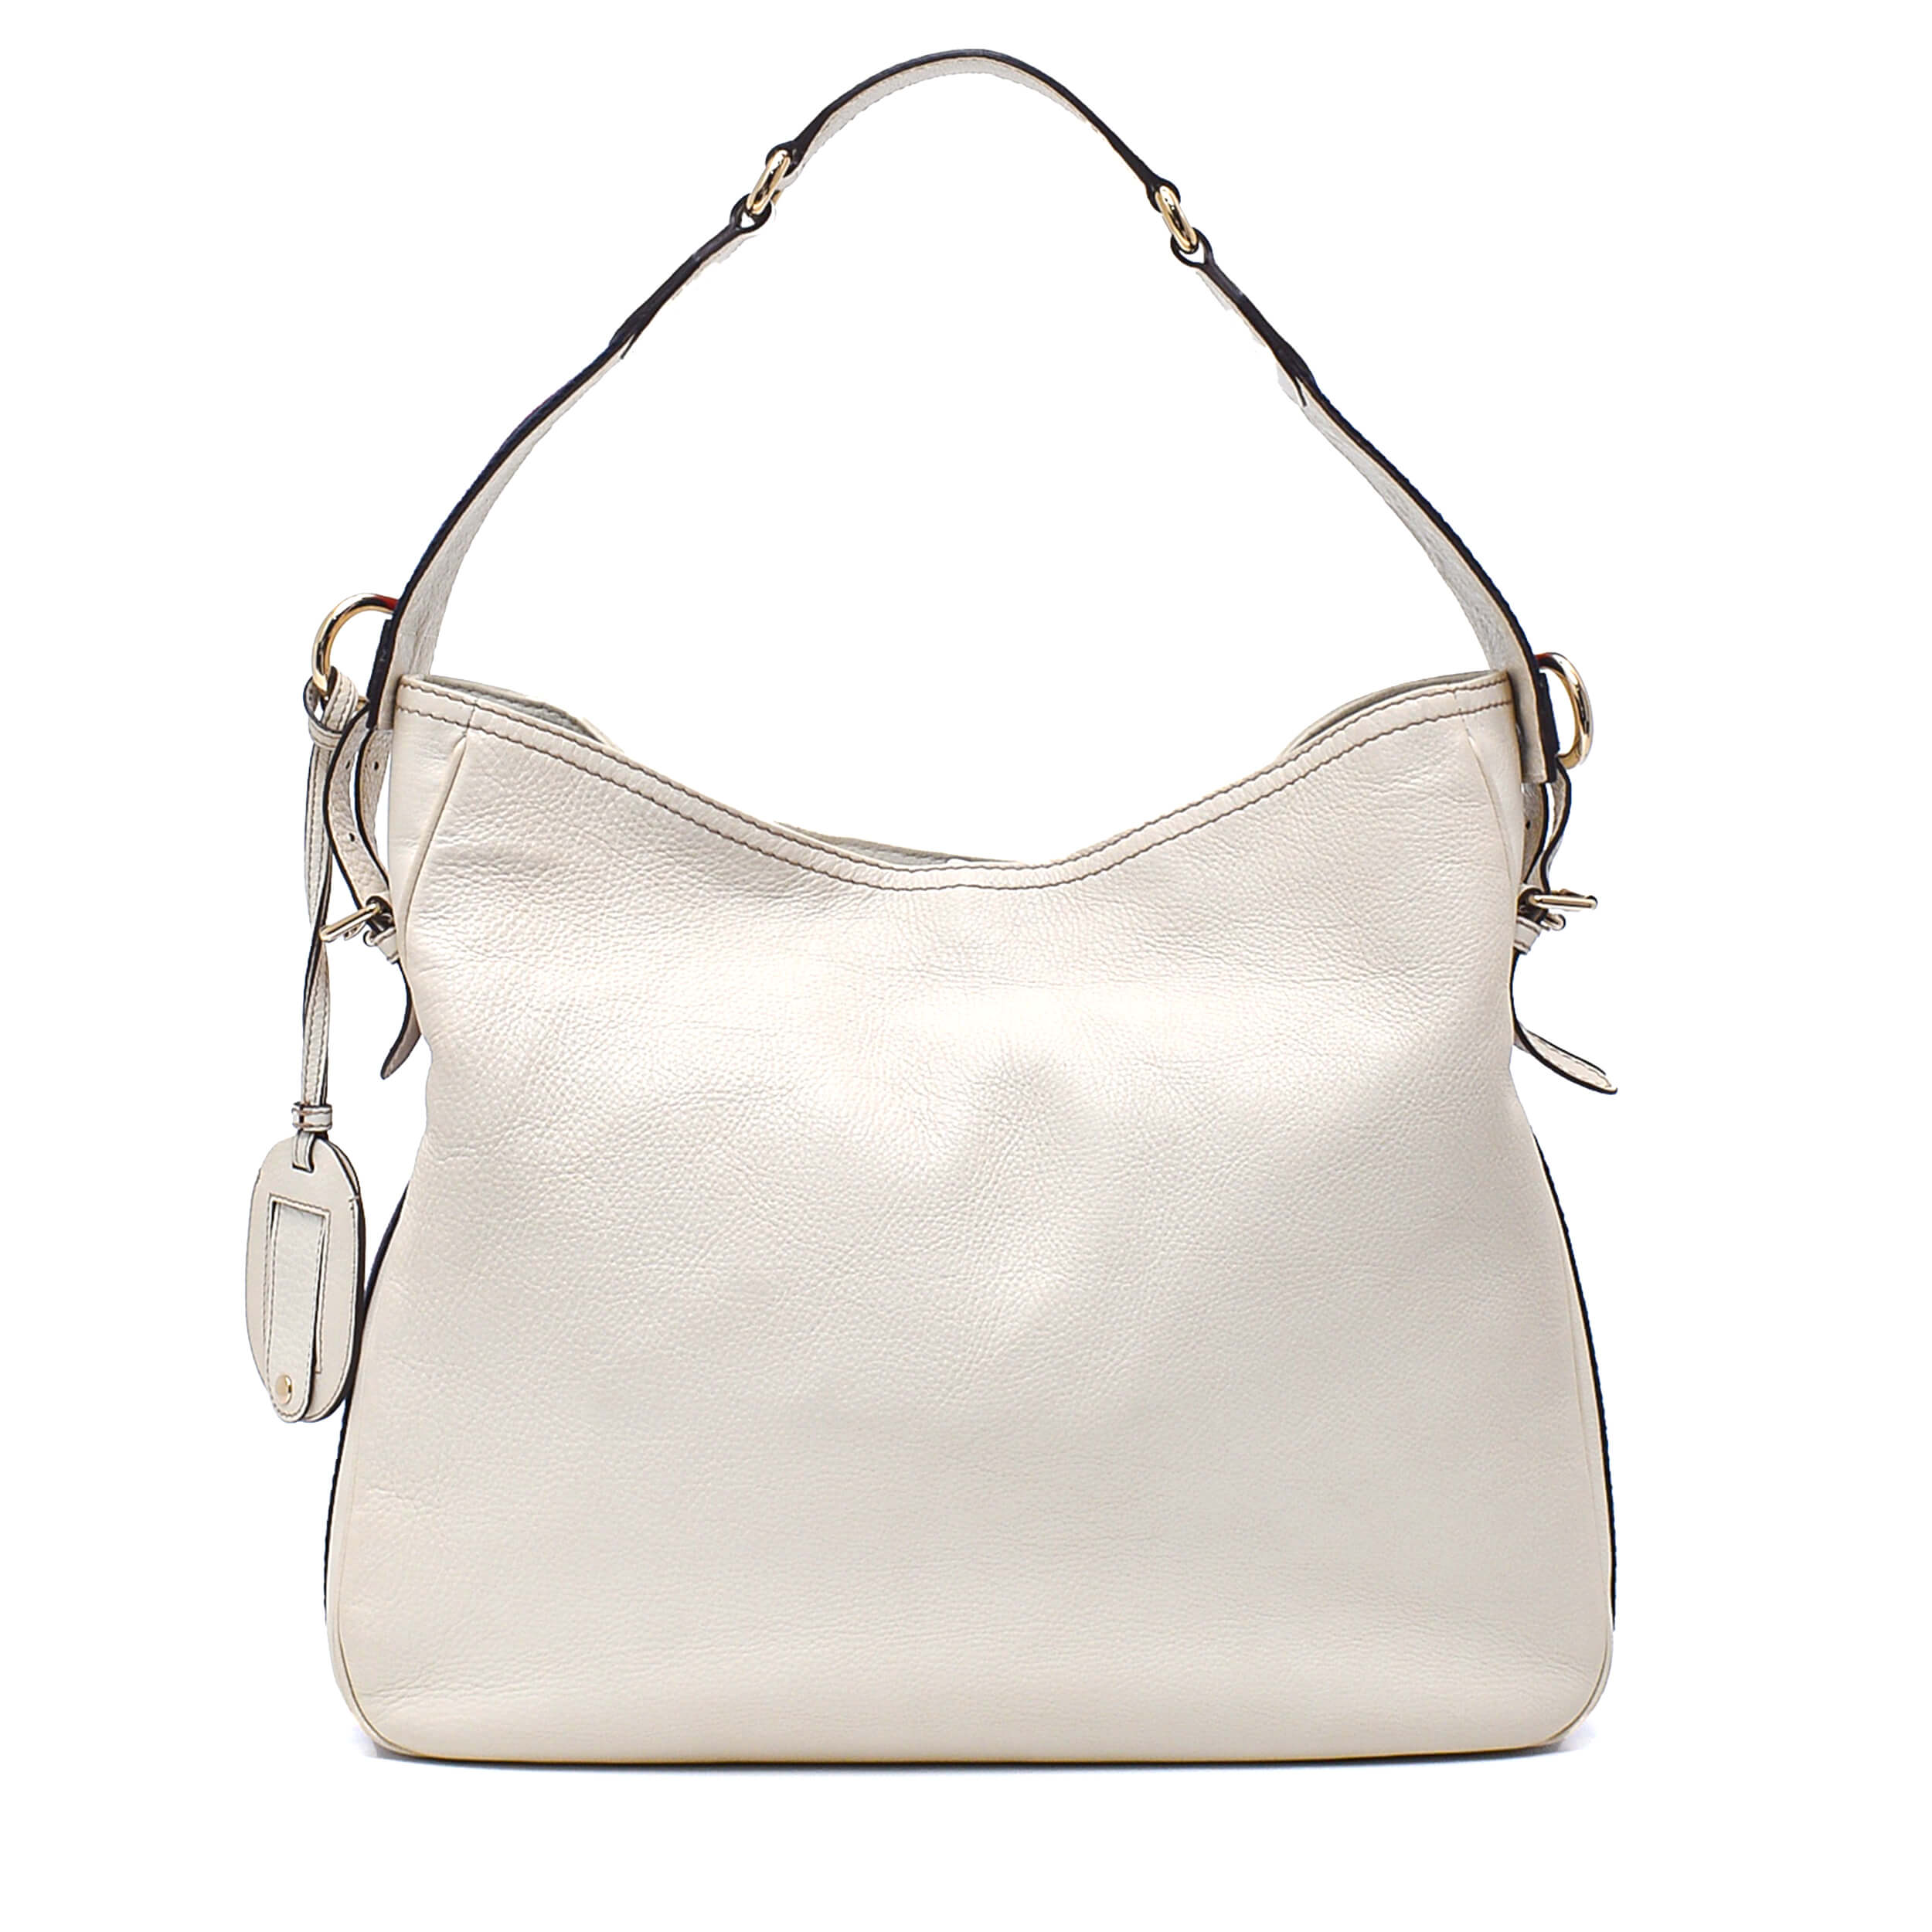 Gucci - White Leather GG Hobo Shoulder Bag